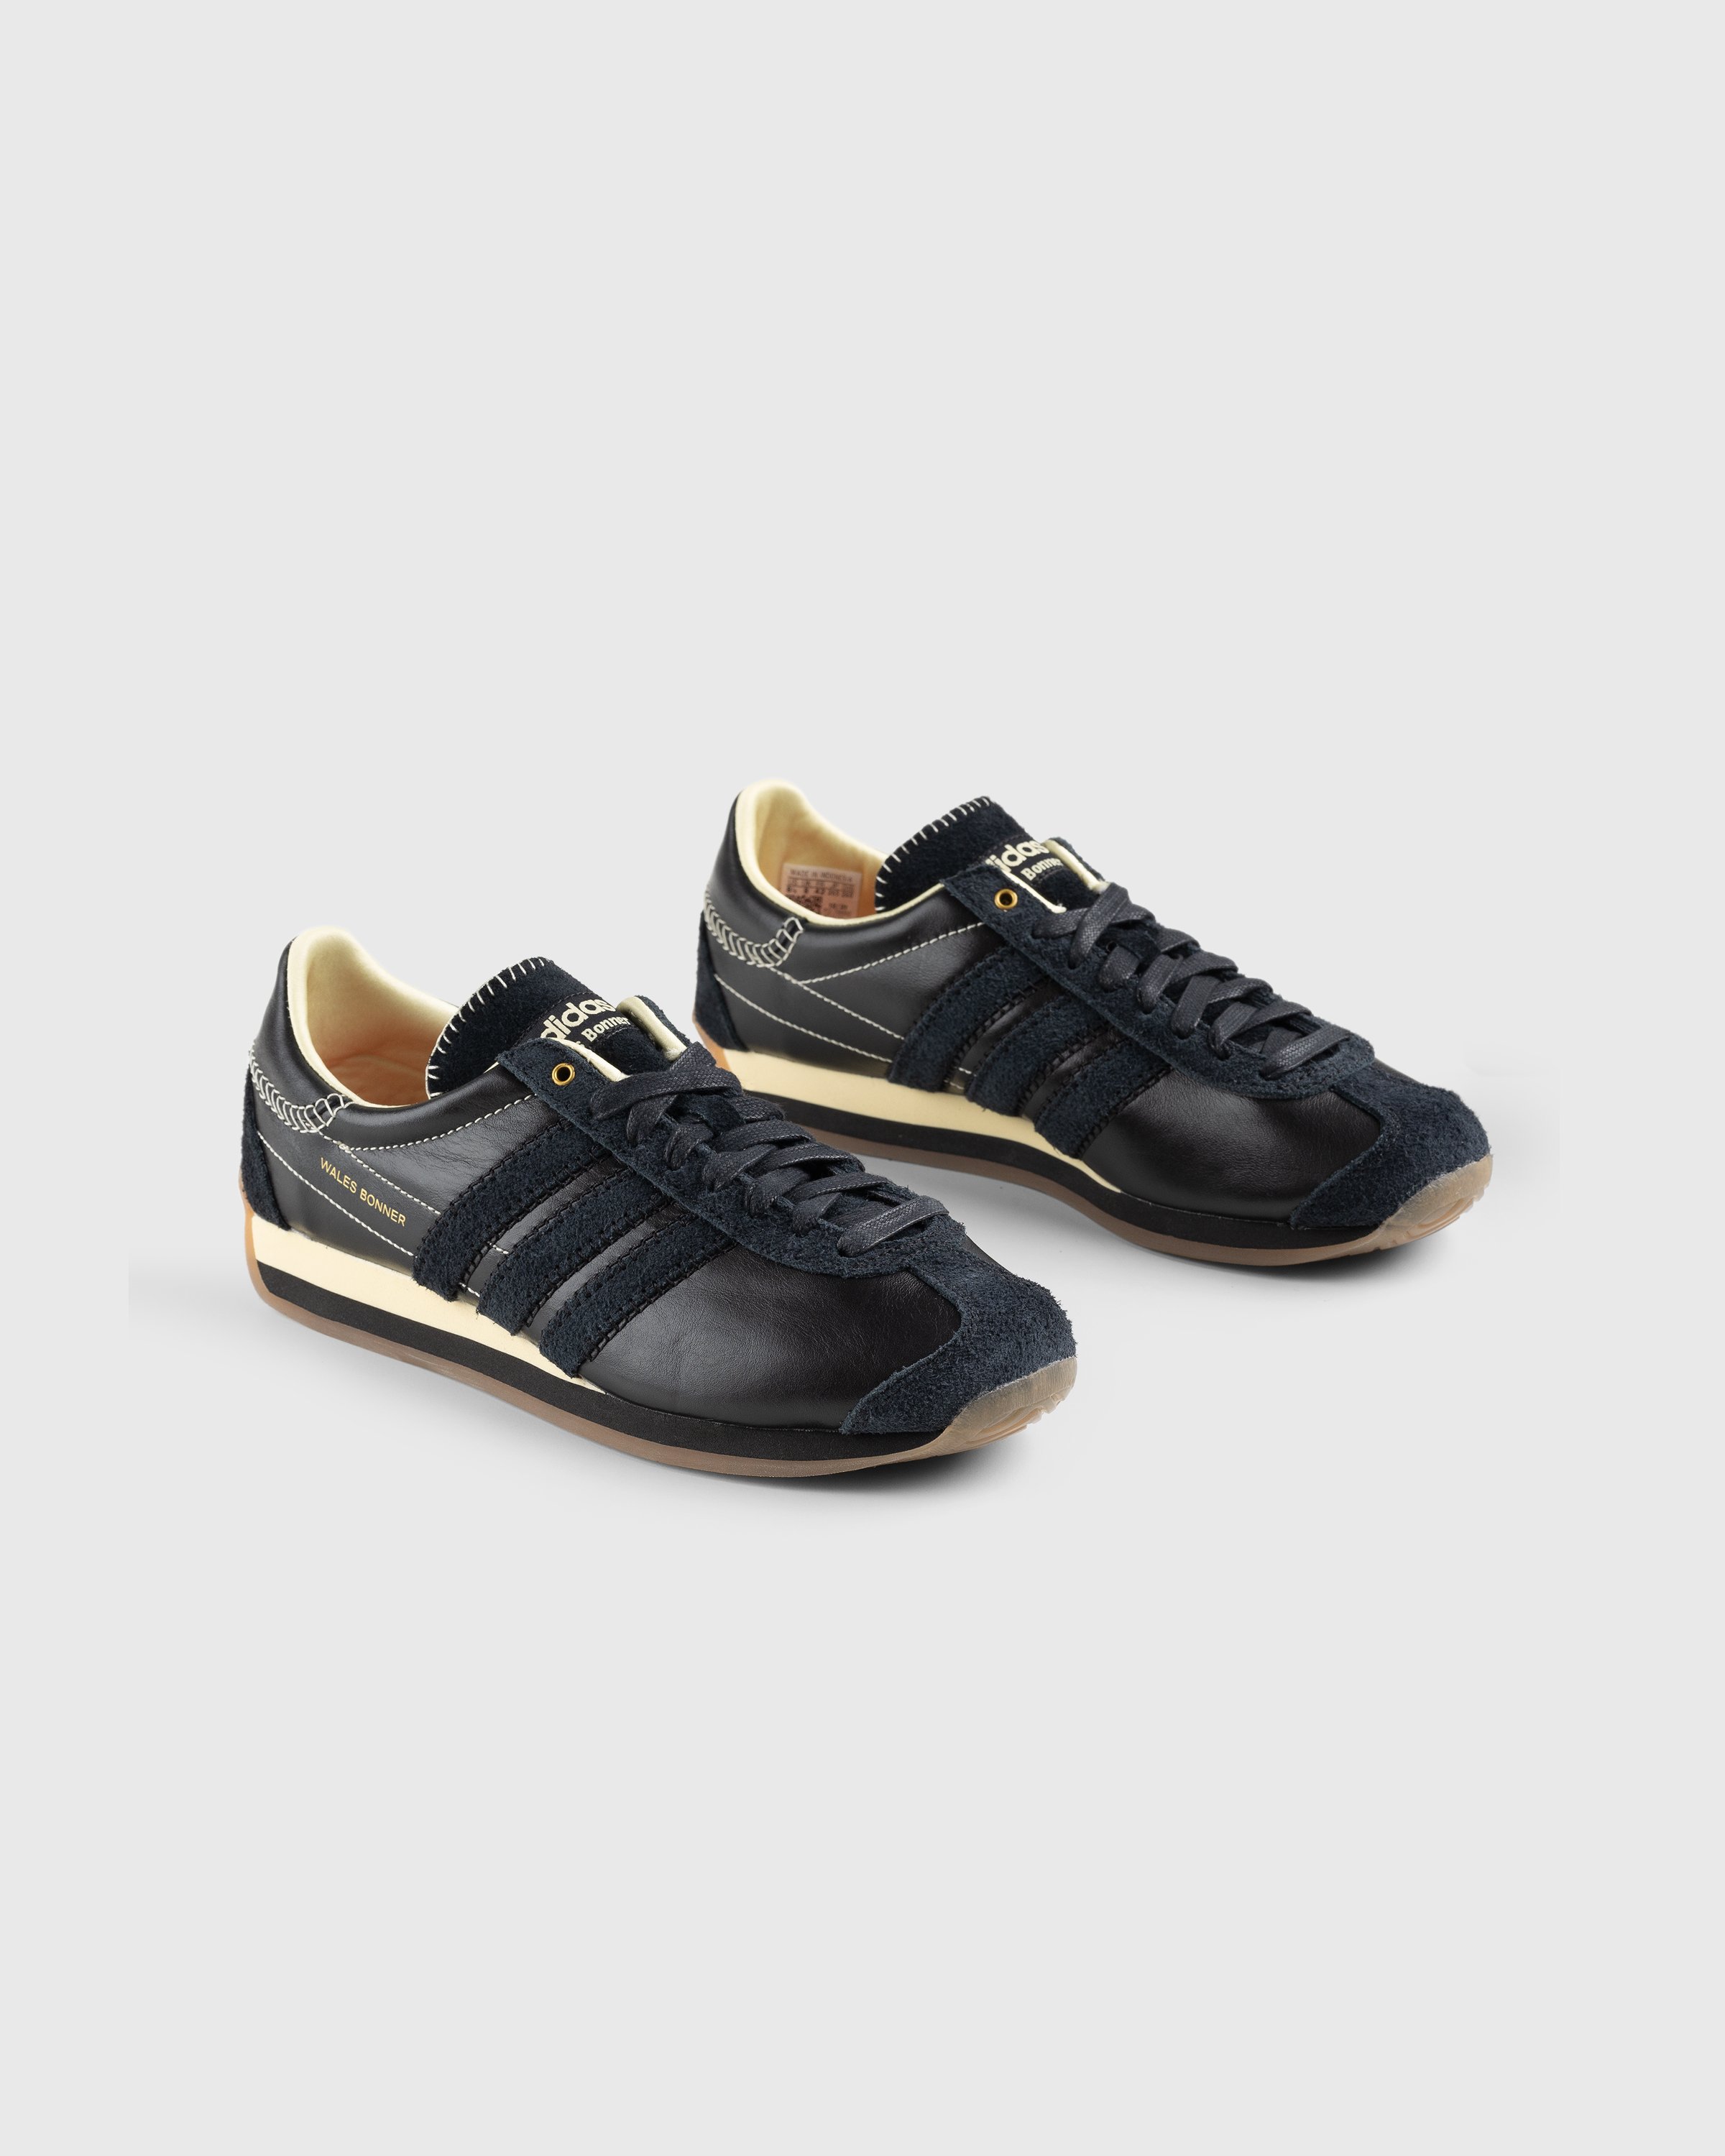 Adidas x Wales Bonner - WB Country Core Black/Core Black/Easy Yellow - Footwear - Black - Image 3